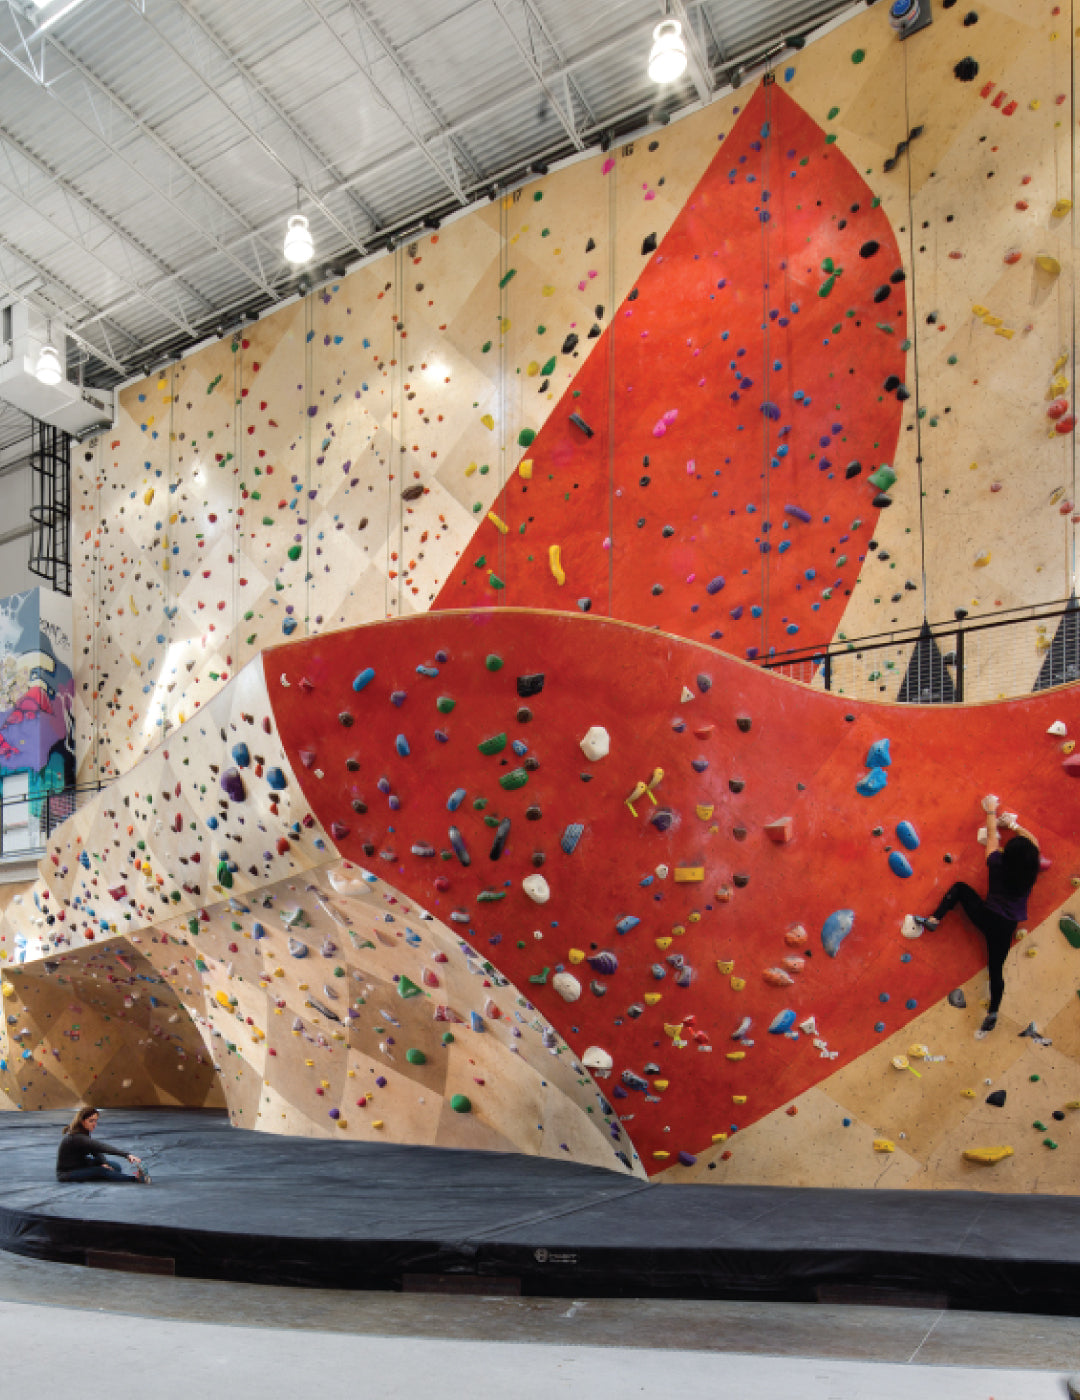 Community indoor rock climbing gym